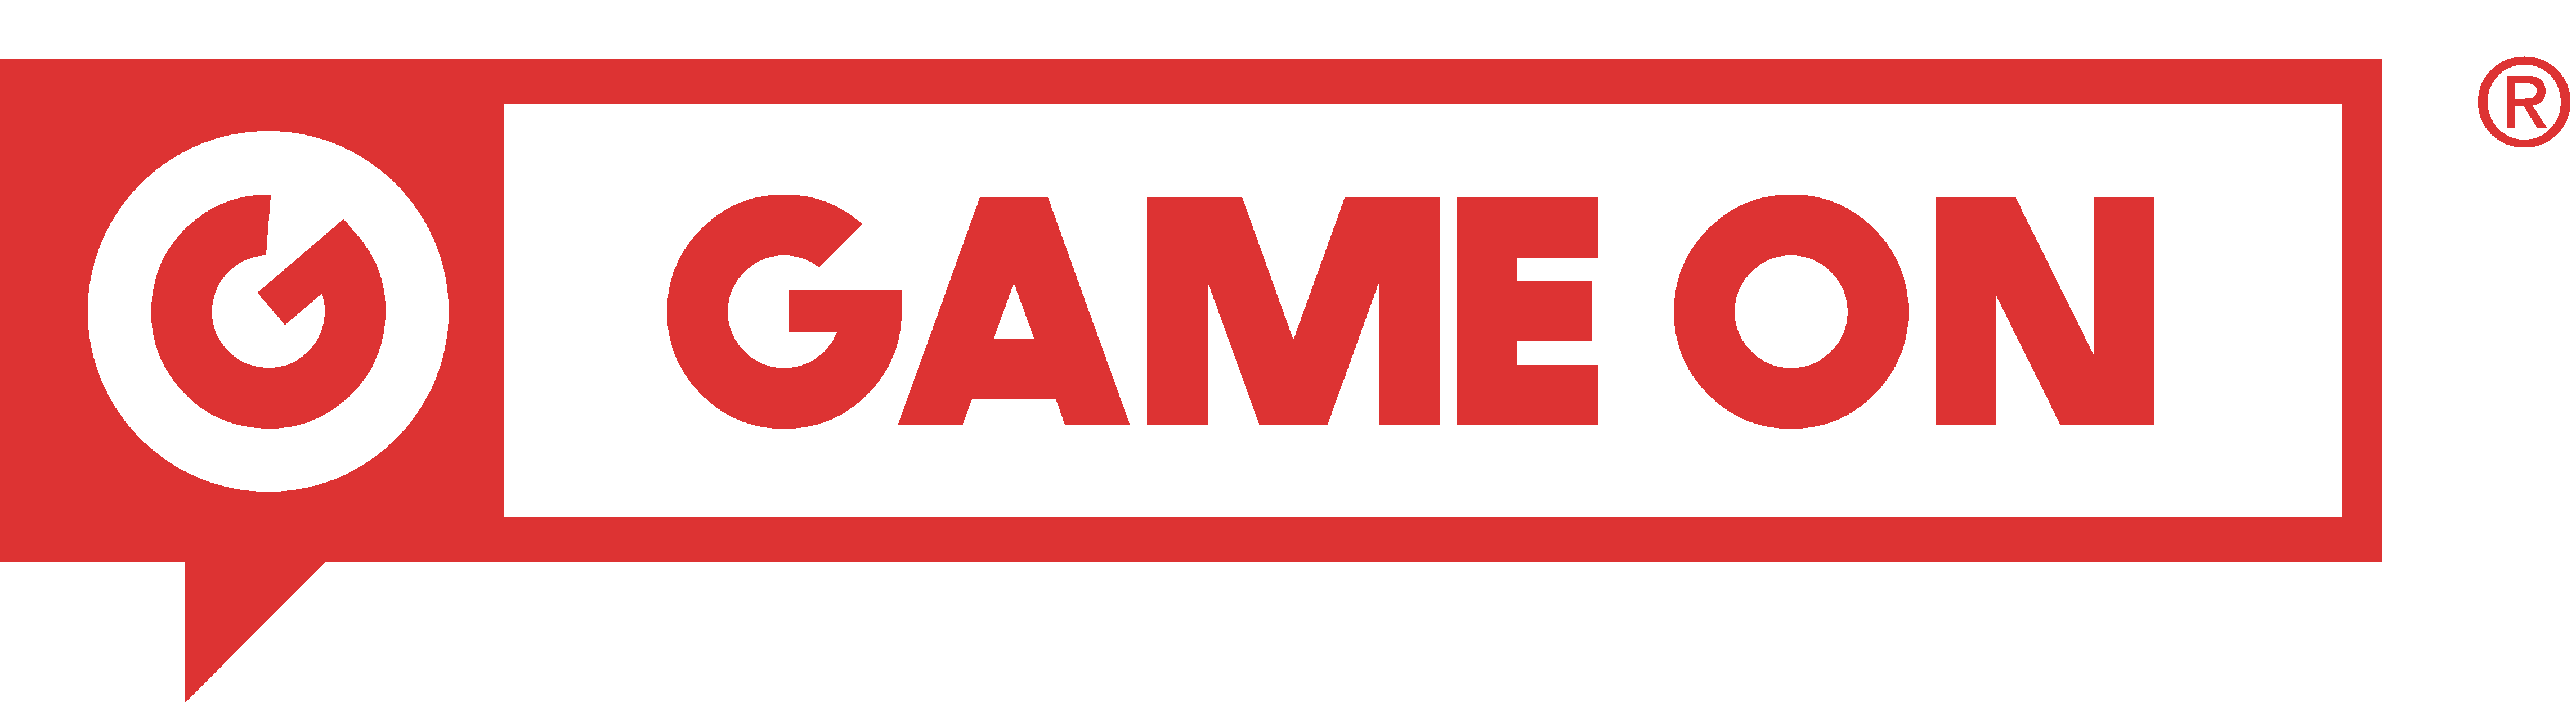 GameOn Marketing logo